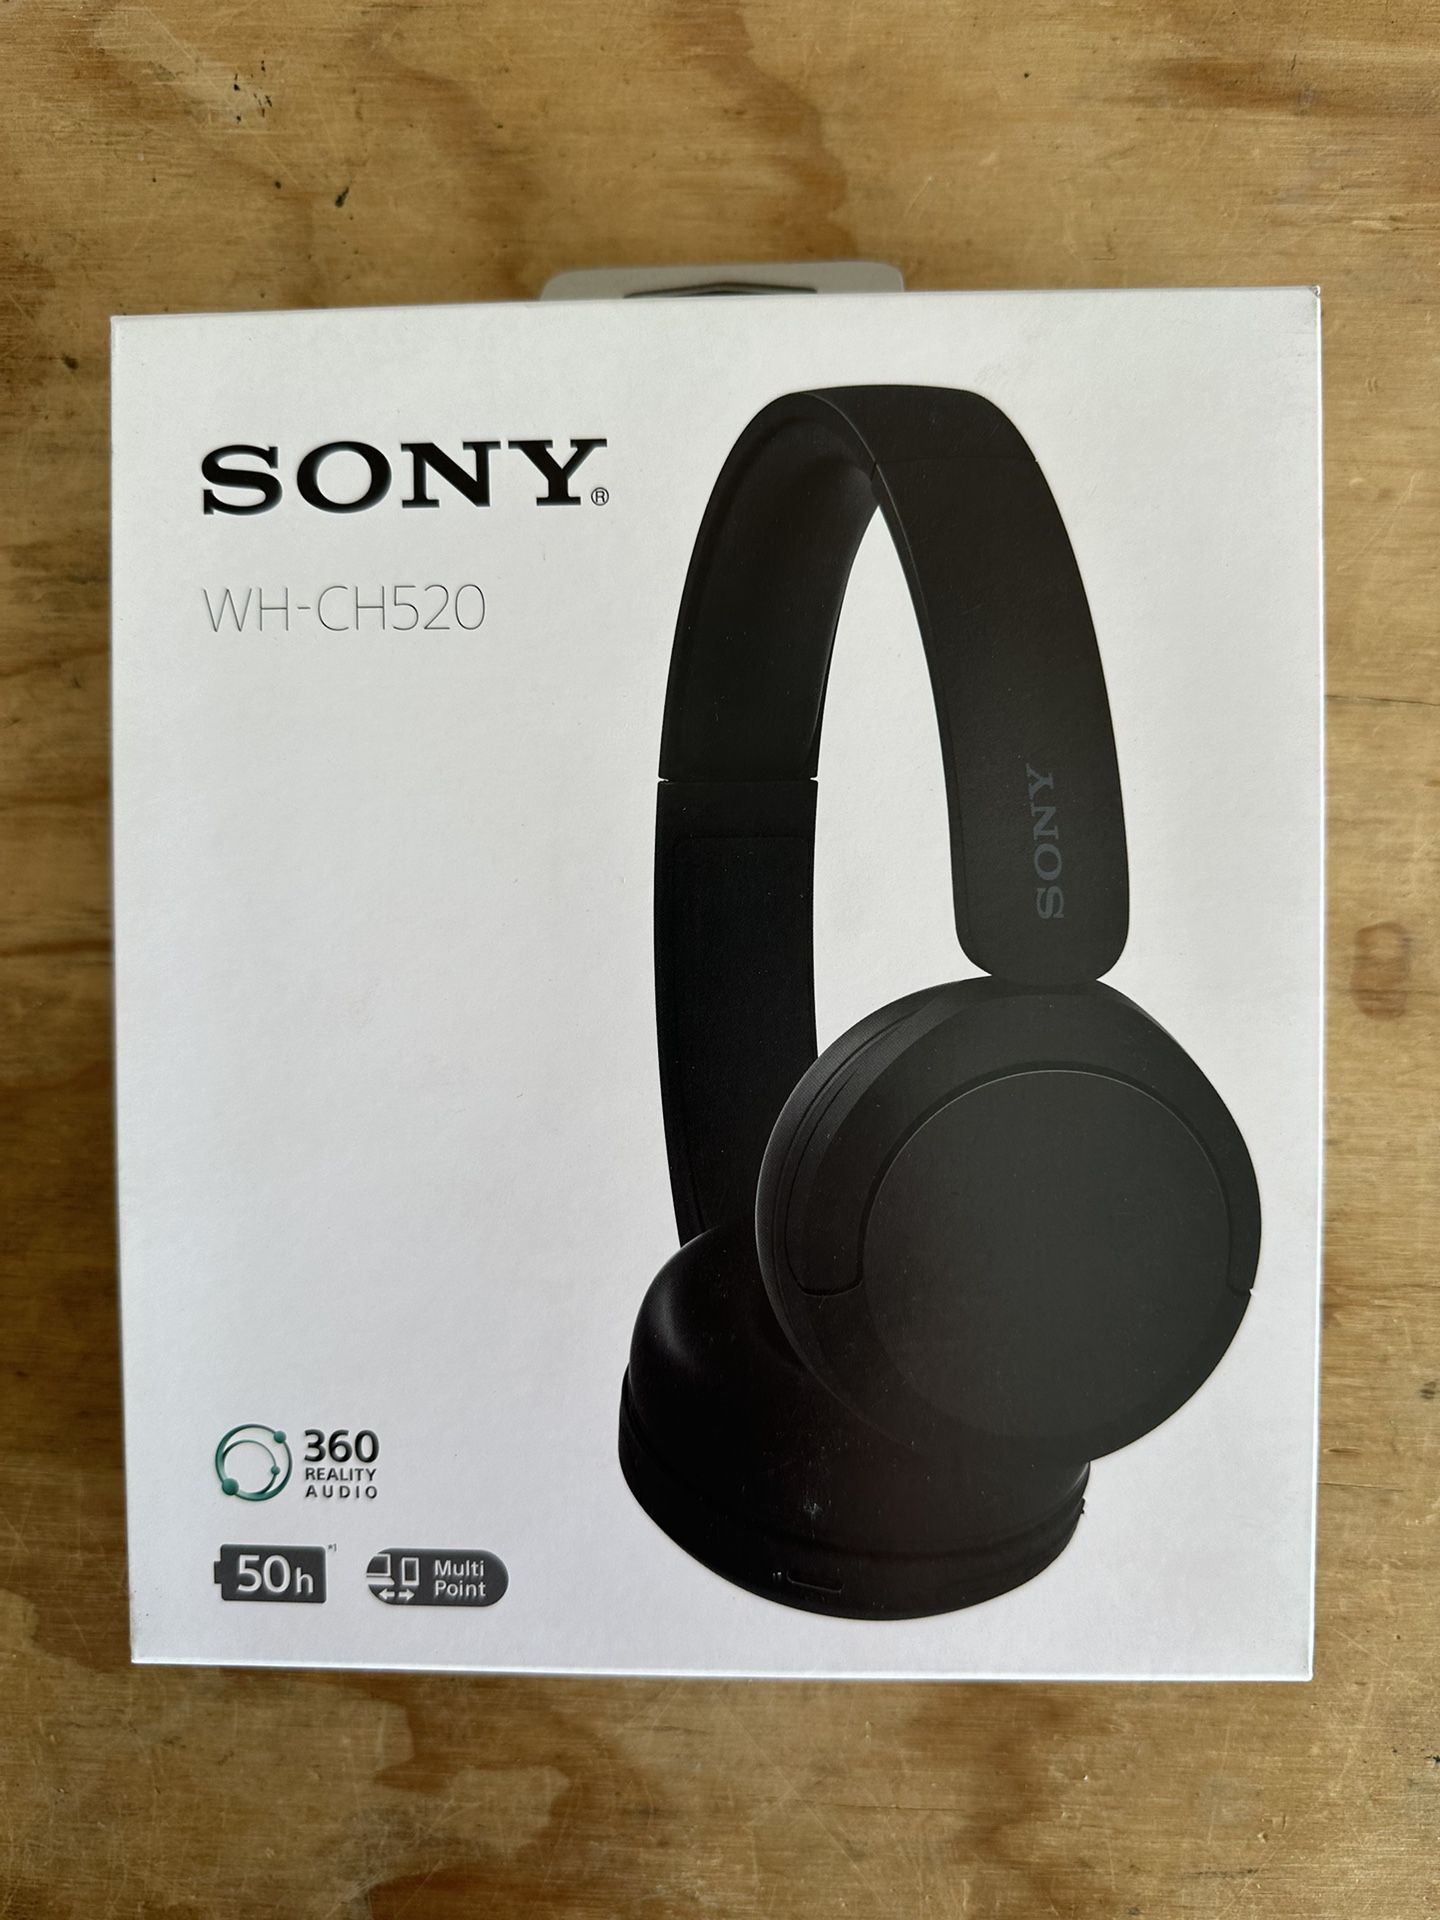 New In Box Sony Bluetooth Headphones 